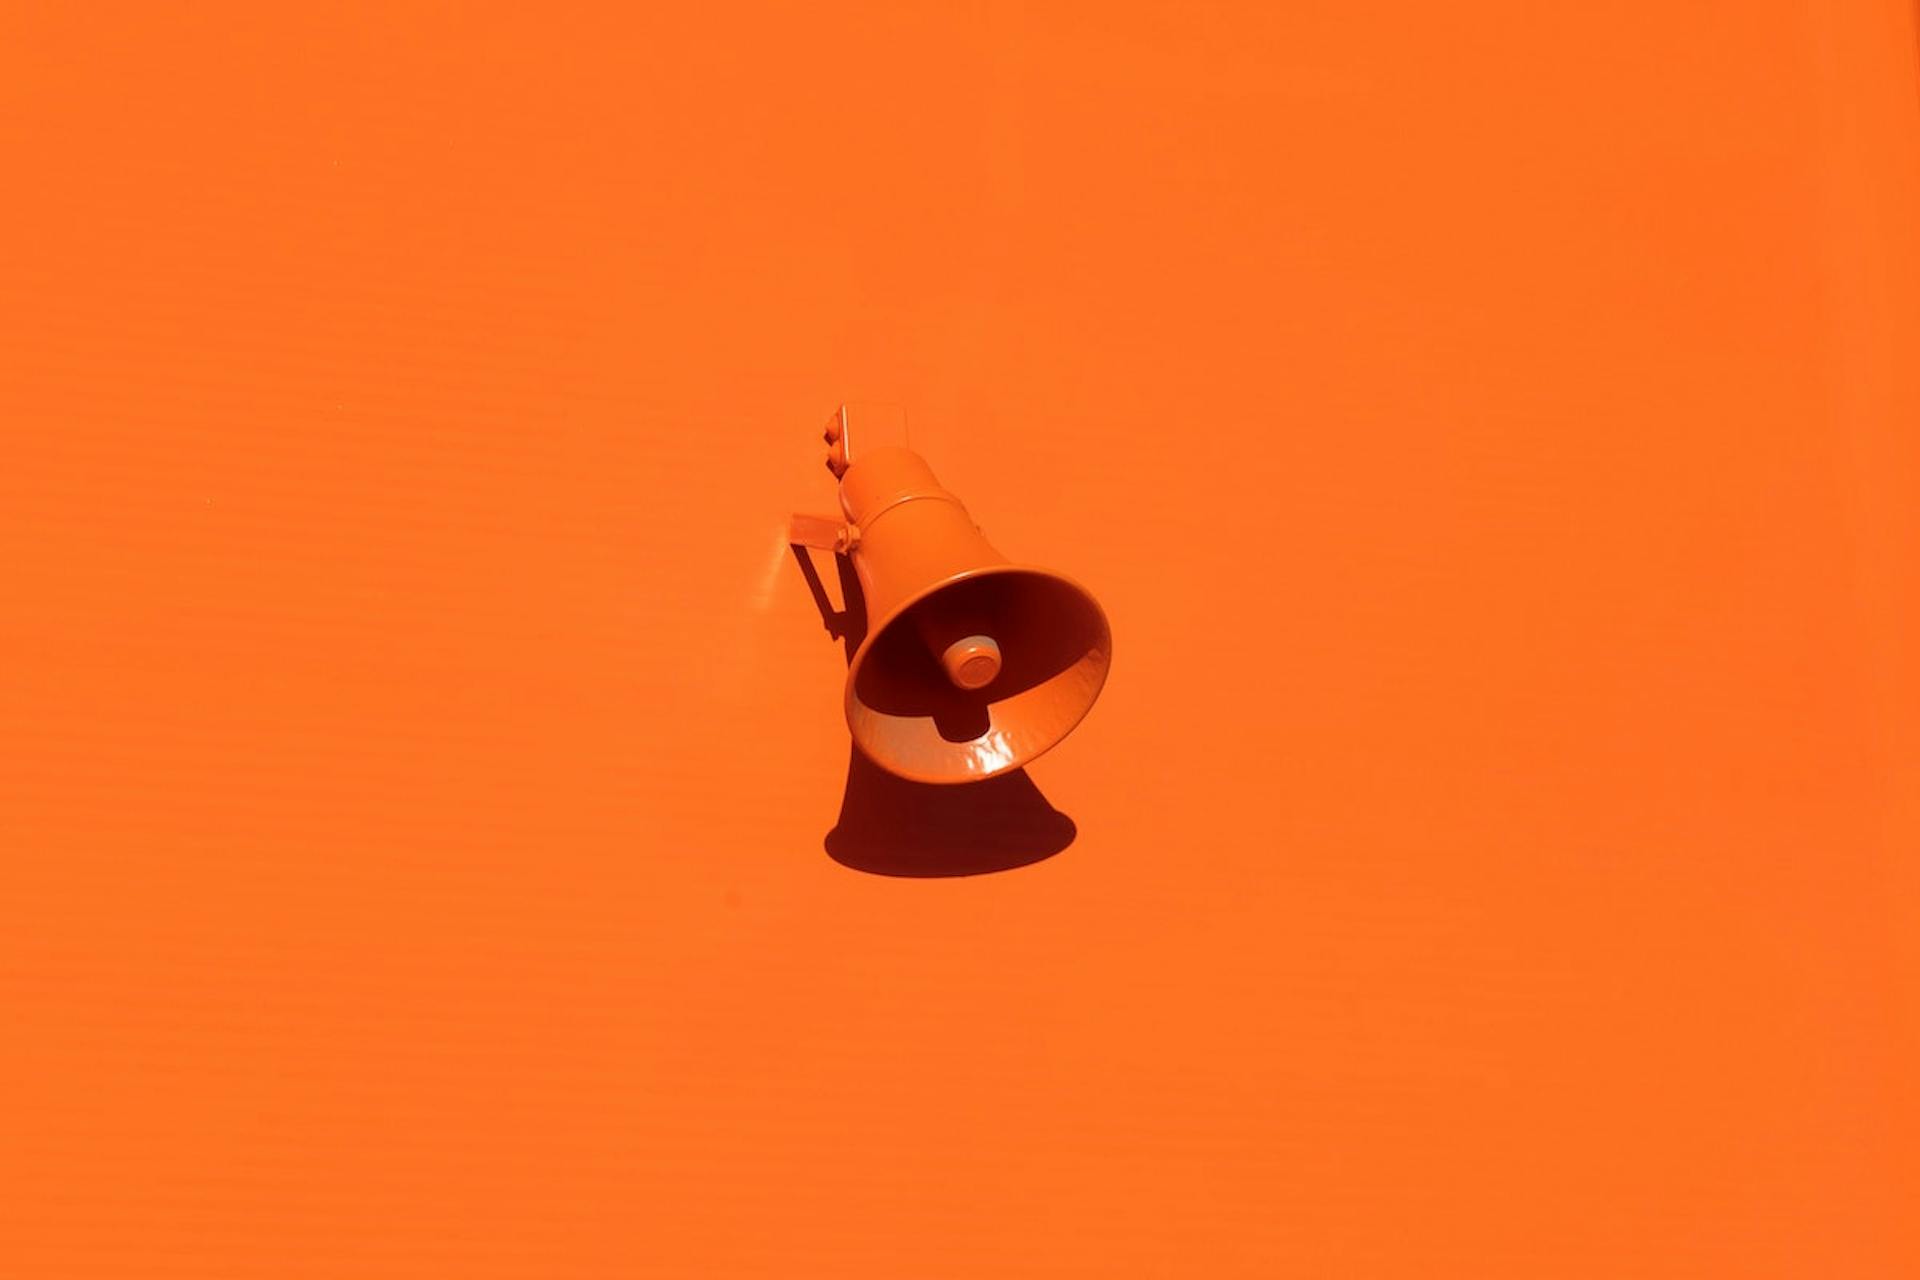 An orange megaphone on an orange surface